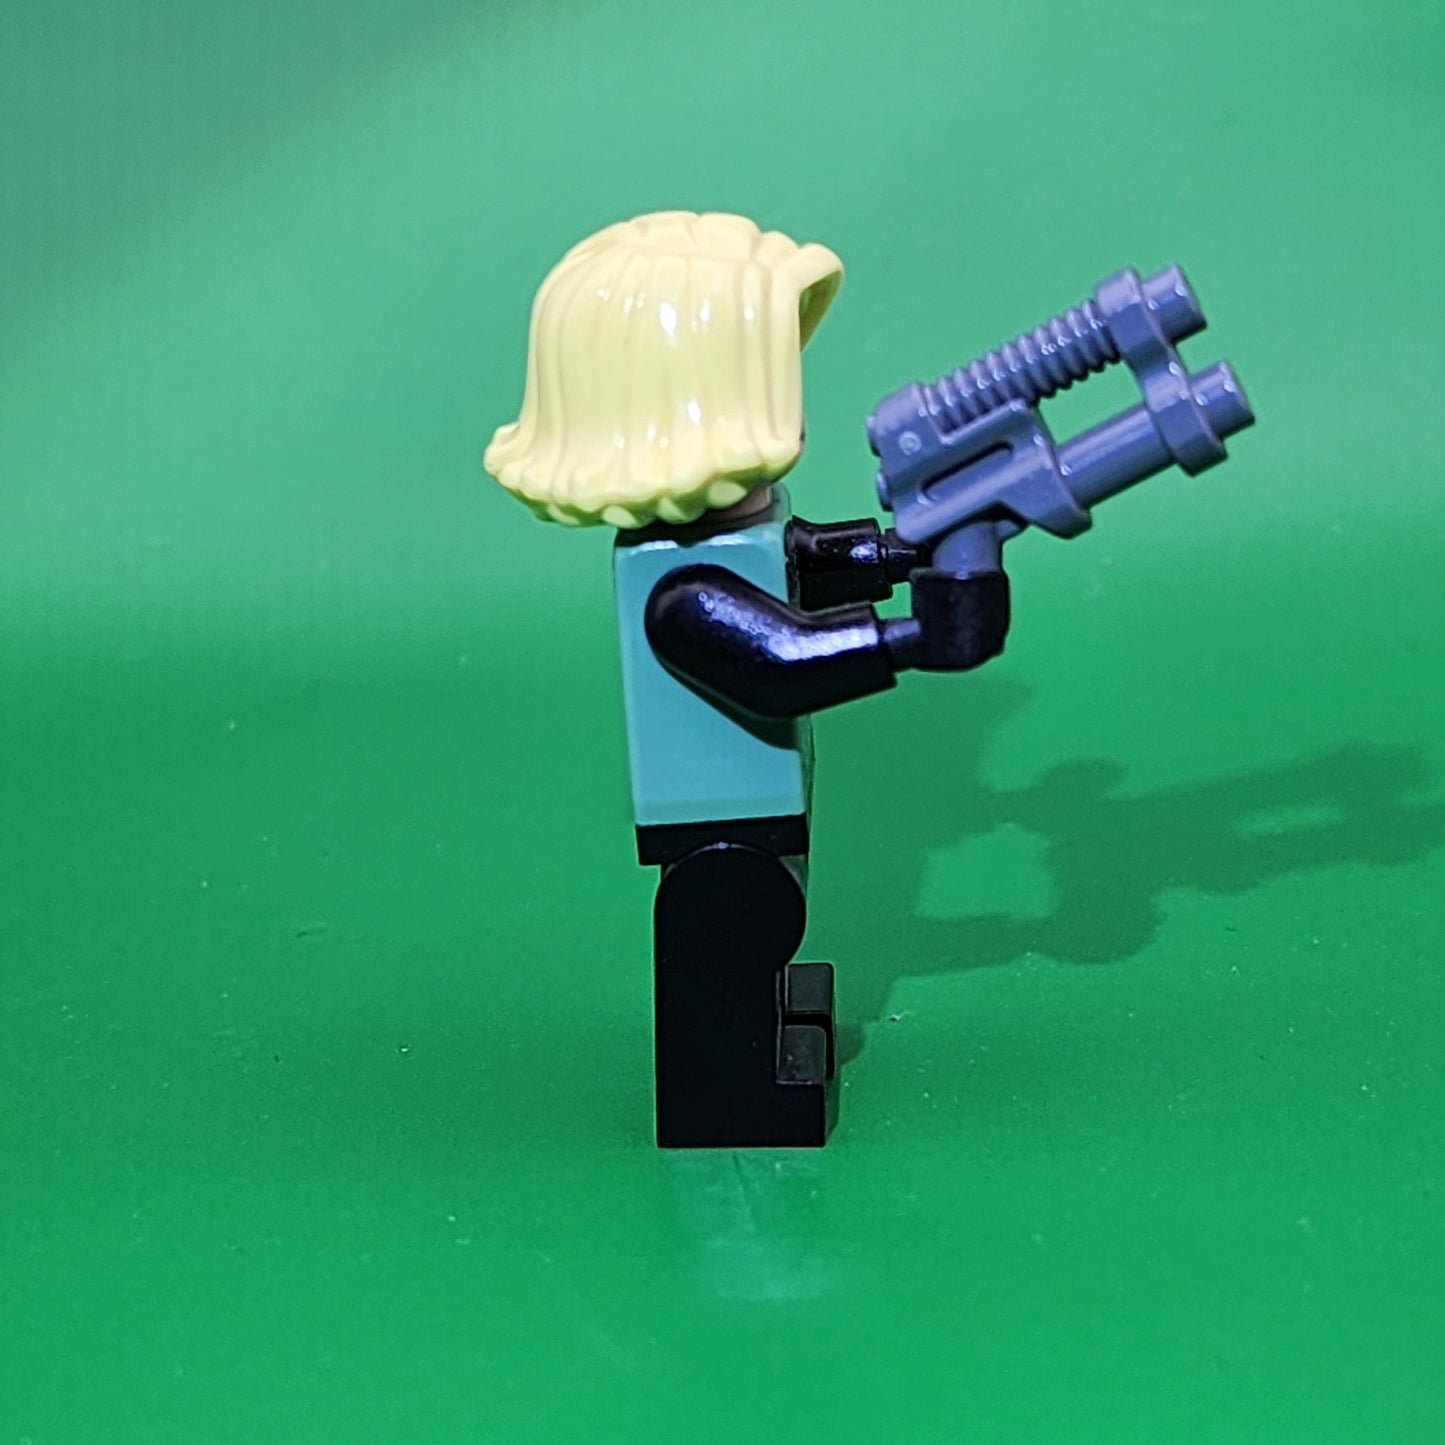 Lego Black Widow Minifigure Sh494 Super Heroes Marvel 76101